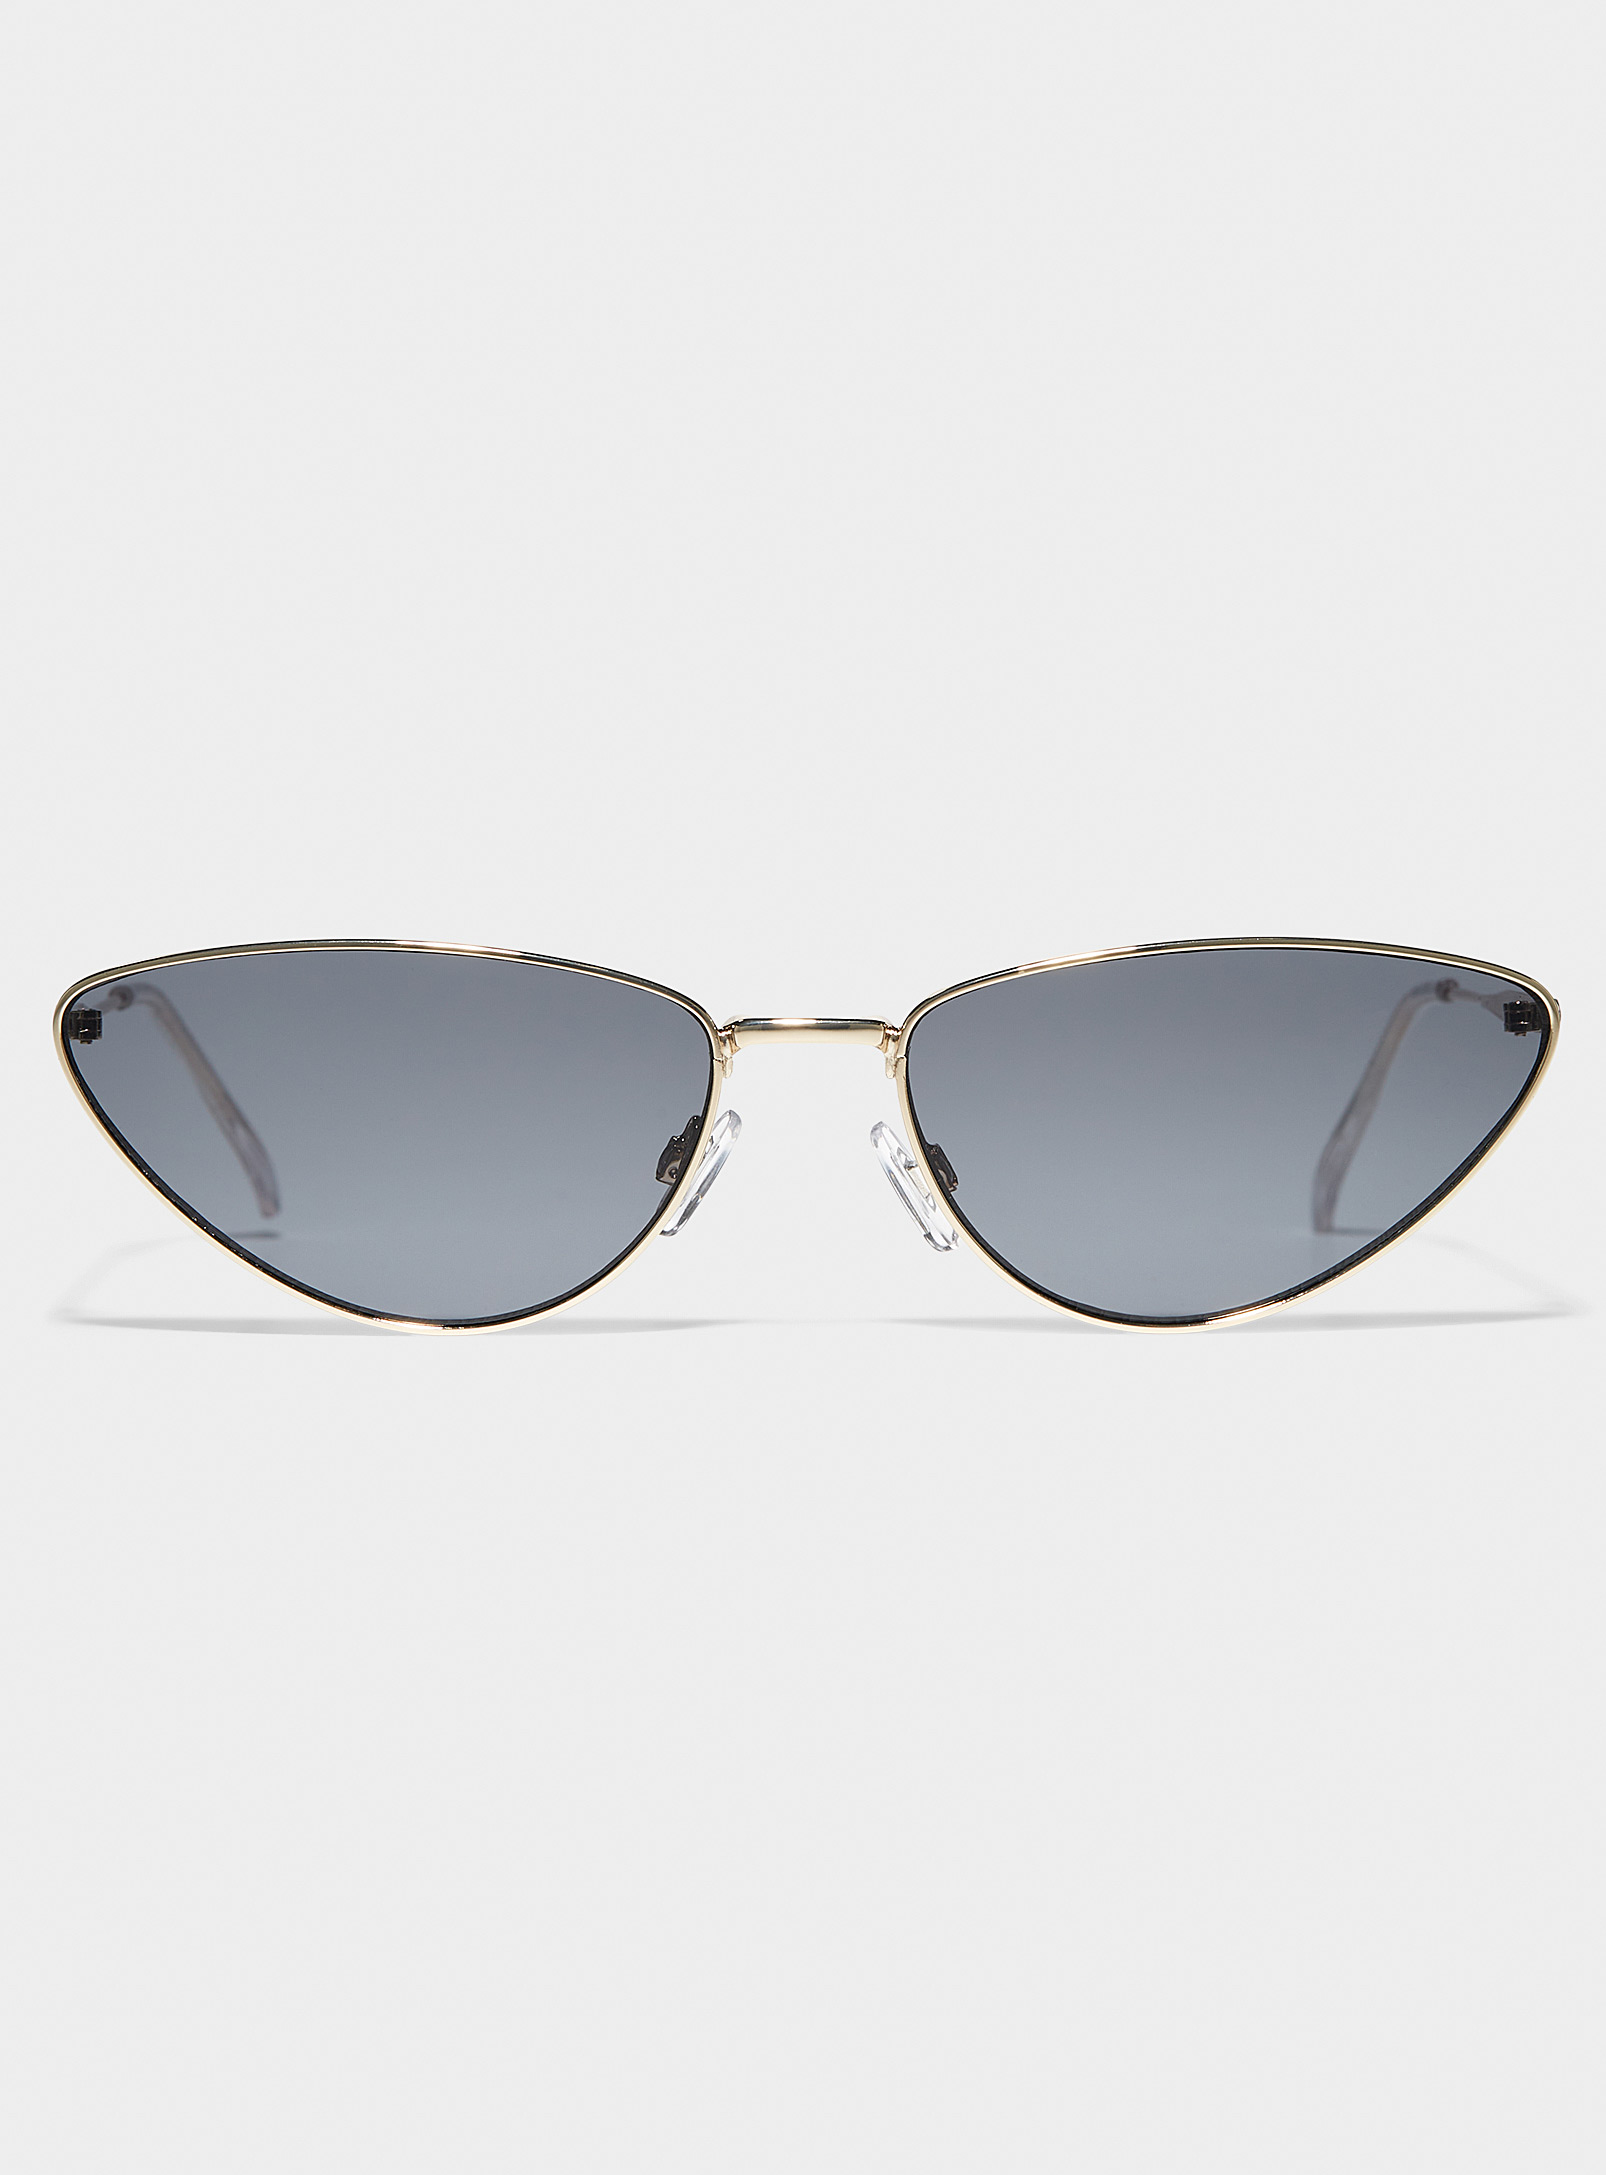 Simons - Women's Narrow cat-eye sunglasses